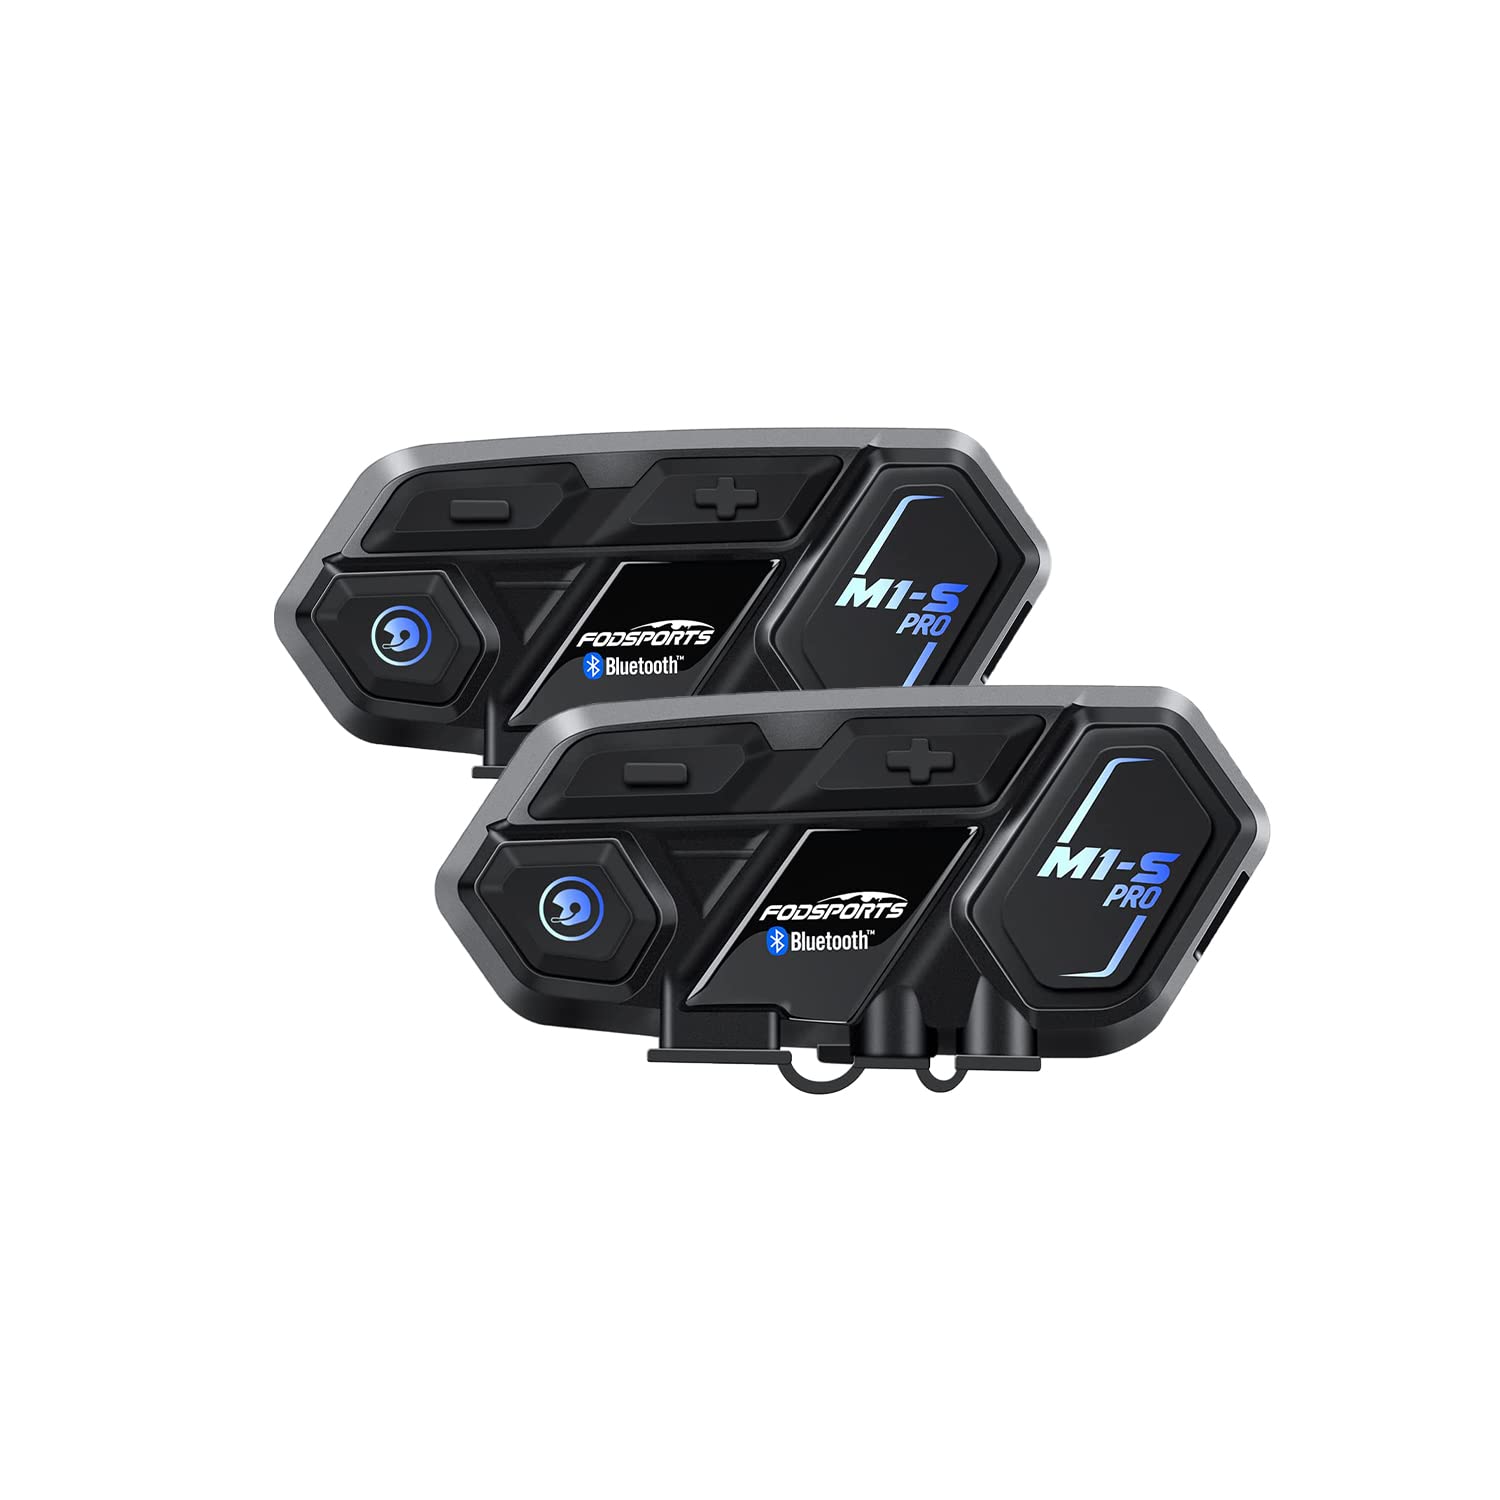 Fodsports Motorrad Bluetooth Headset mit Musik Teilen, M1S PRO 2000m 8 Motorräder Helm Intercom Kommunikationssystem, Universell Motorradhelm Gegensprechanlage mit Audio Multitasking, Doppelpack